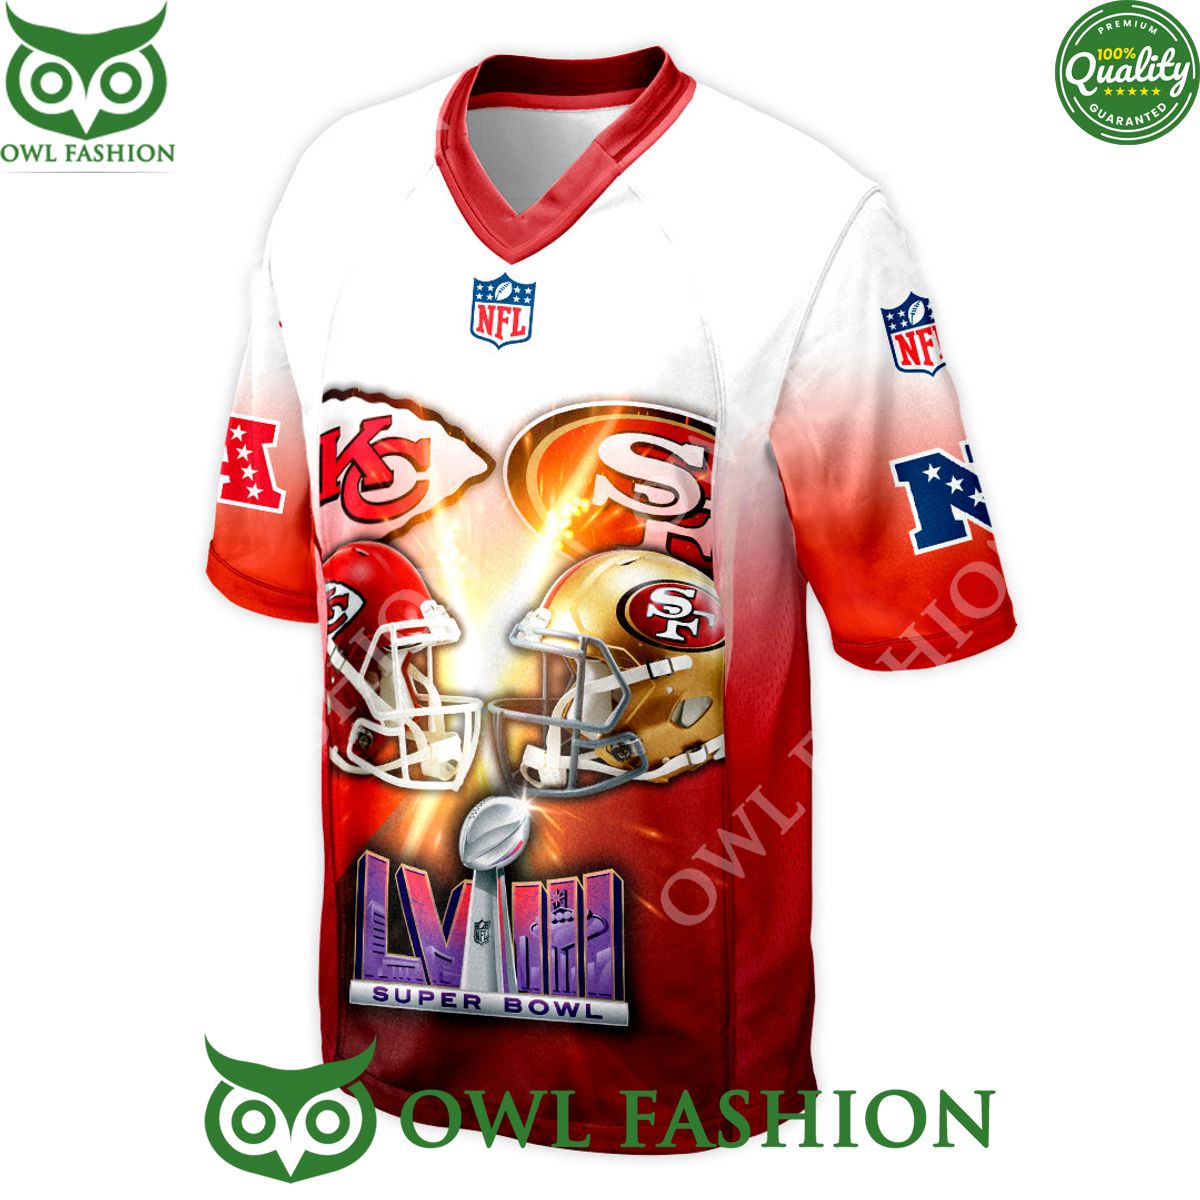 nfl kc vs sf 49ers edition especial super bowl lviii jersey shirt 1 ZIG9s.jpg